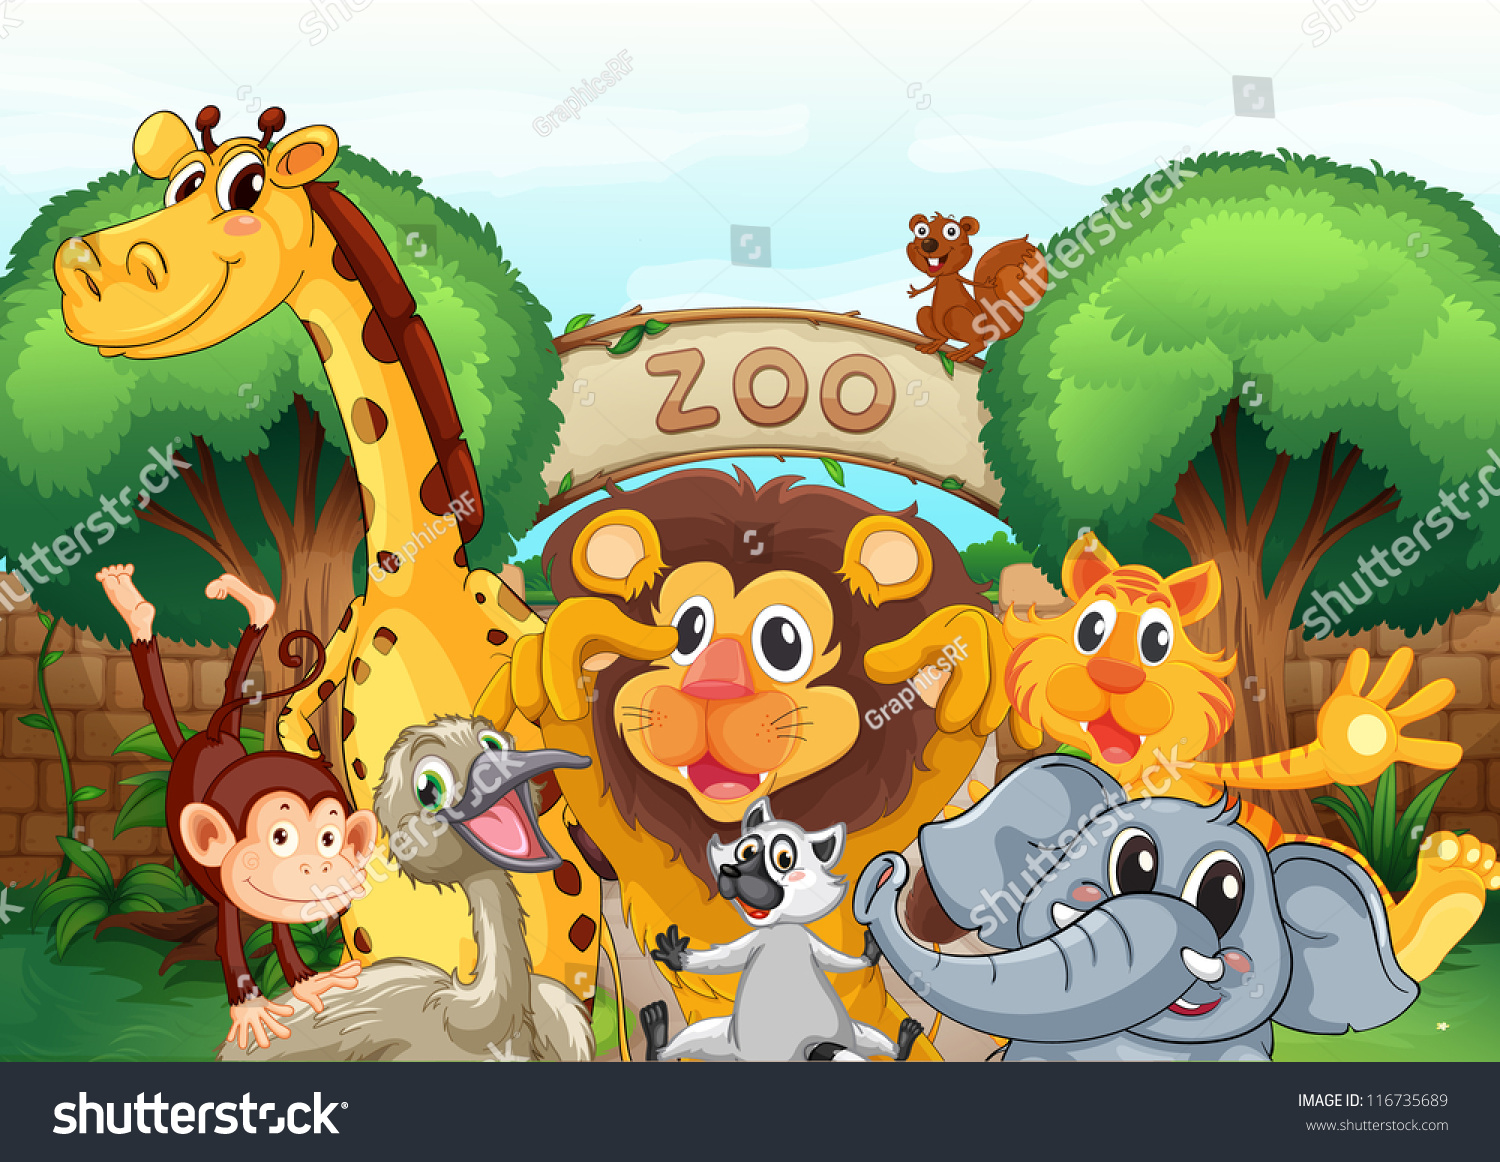 zoo gate clipart - photo #35